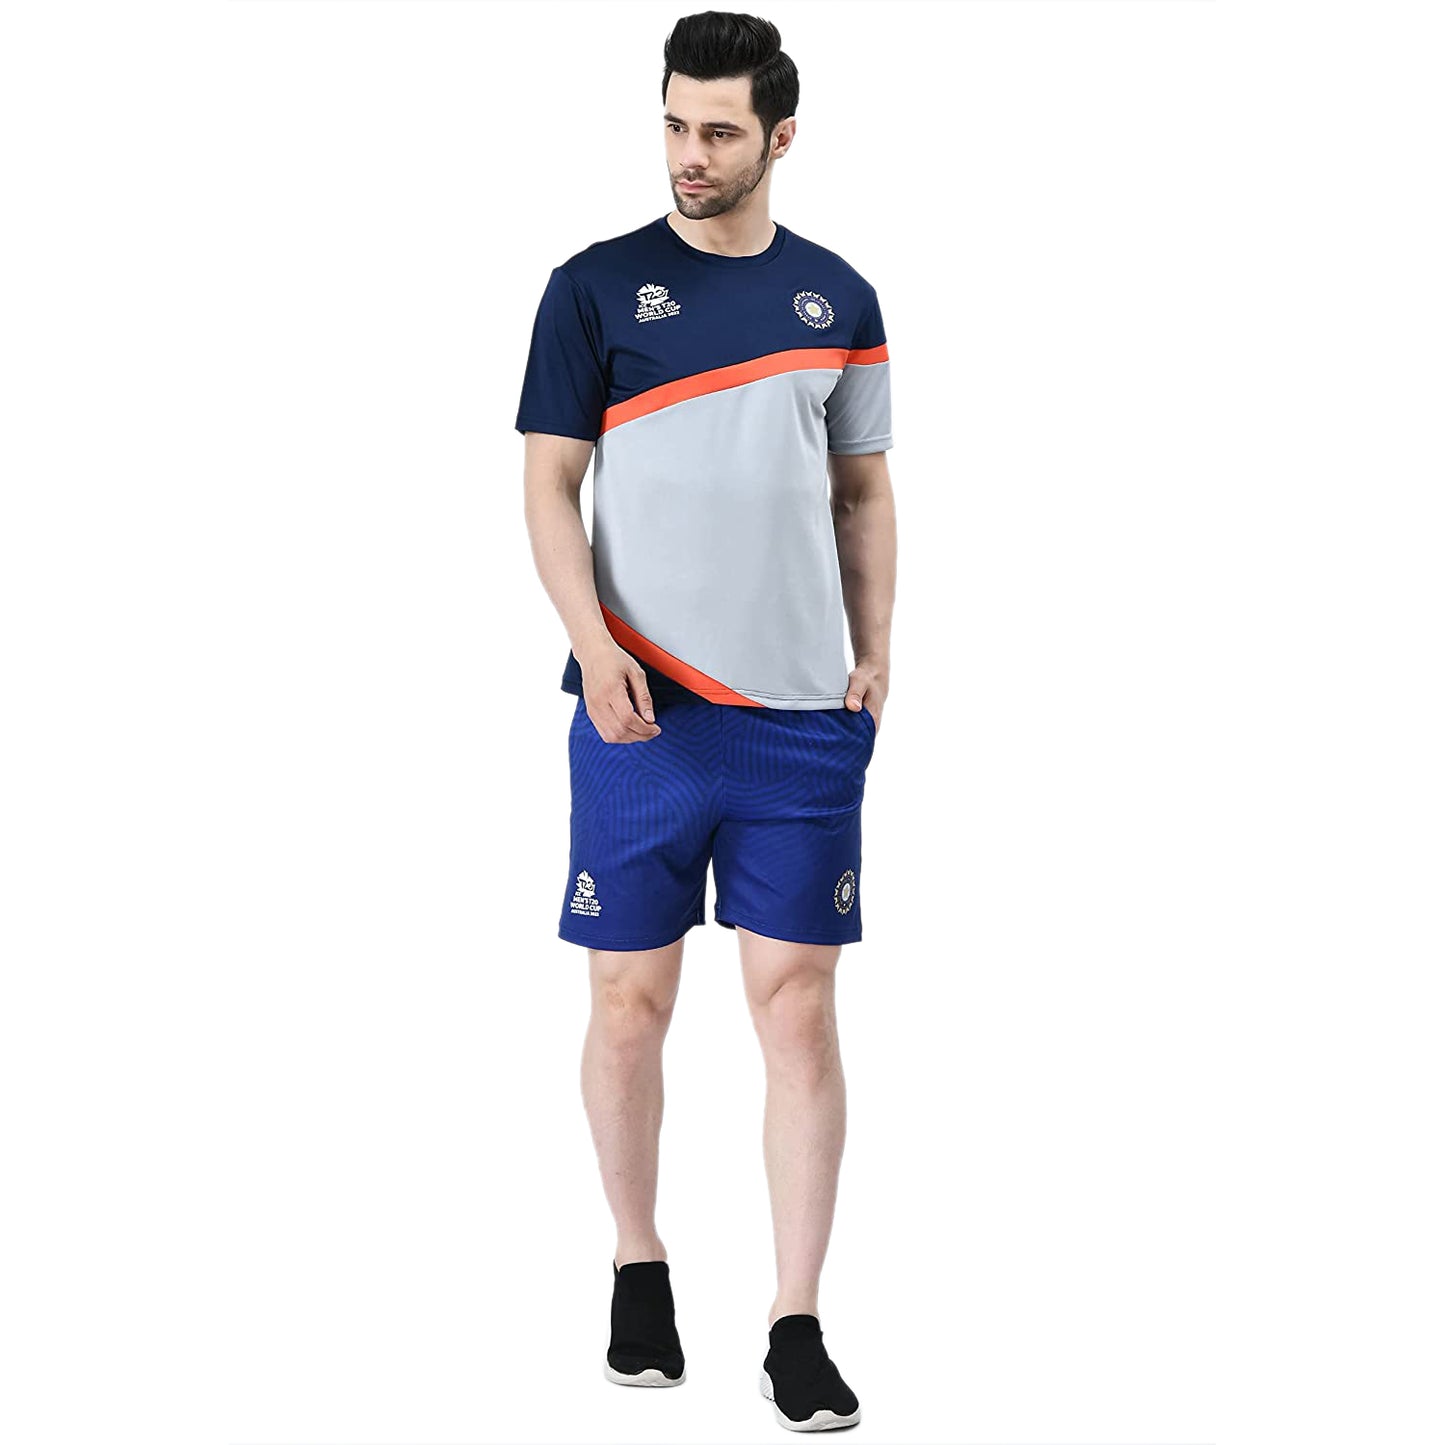 Playr Icc T20 Men's Regular Fit T-Shirt - Best Price online Prokicksports.com